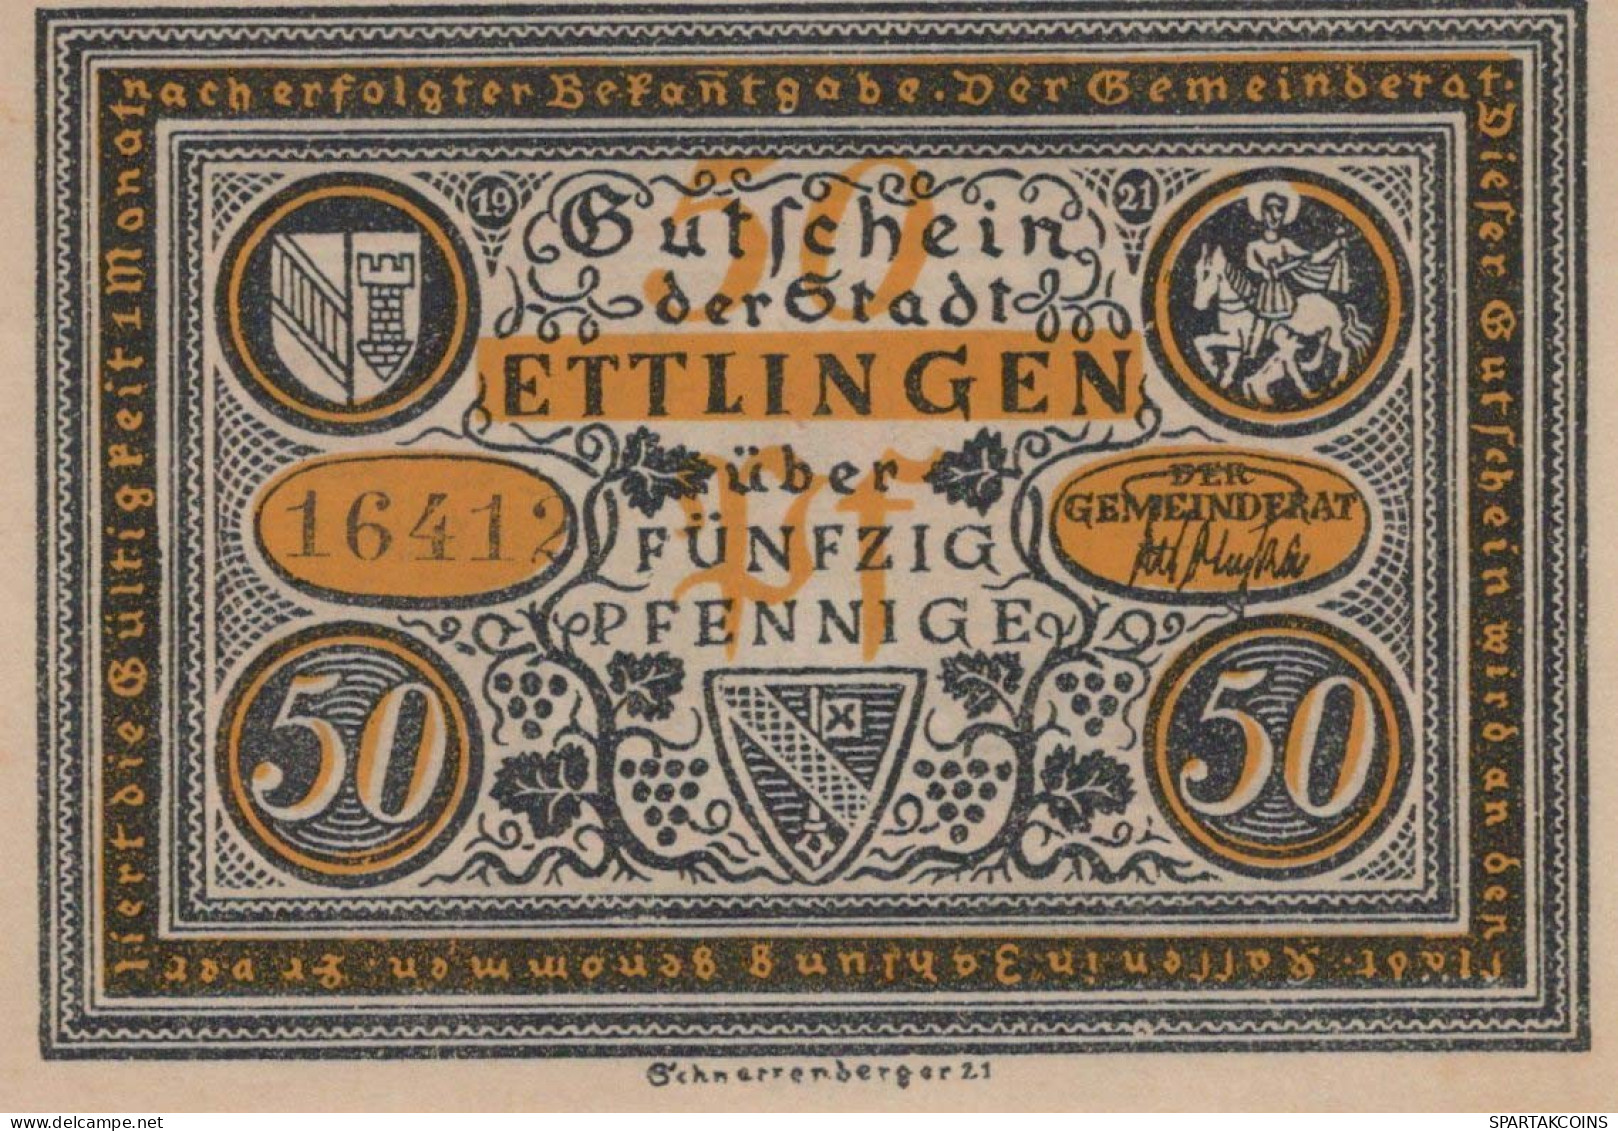 50 PFENNIG 1921 Stadt ETTLINGEN Baden UNC DEUTSCHLAND Notgeld Banknote #PB365 - [11] Local Banknote Issues